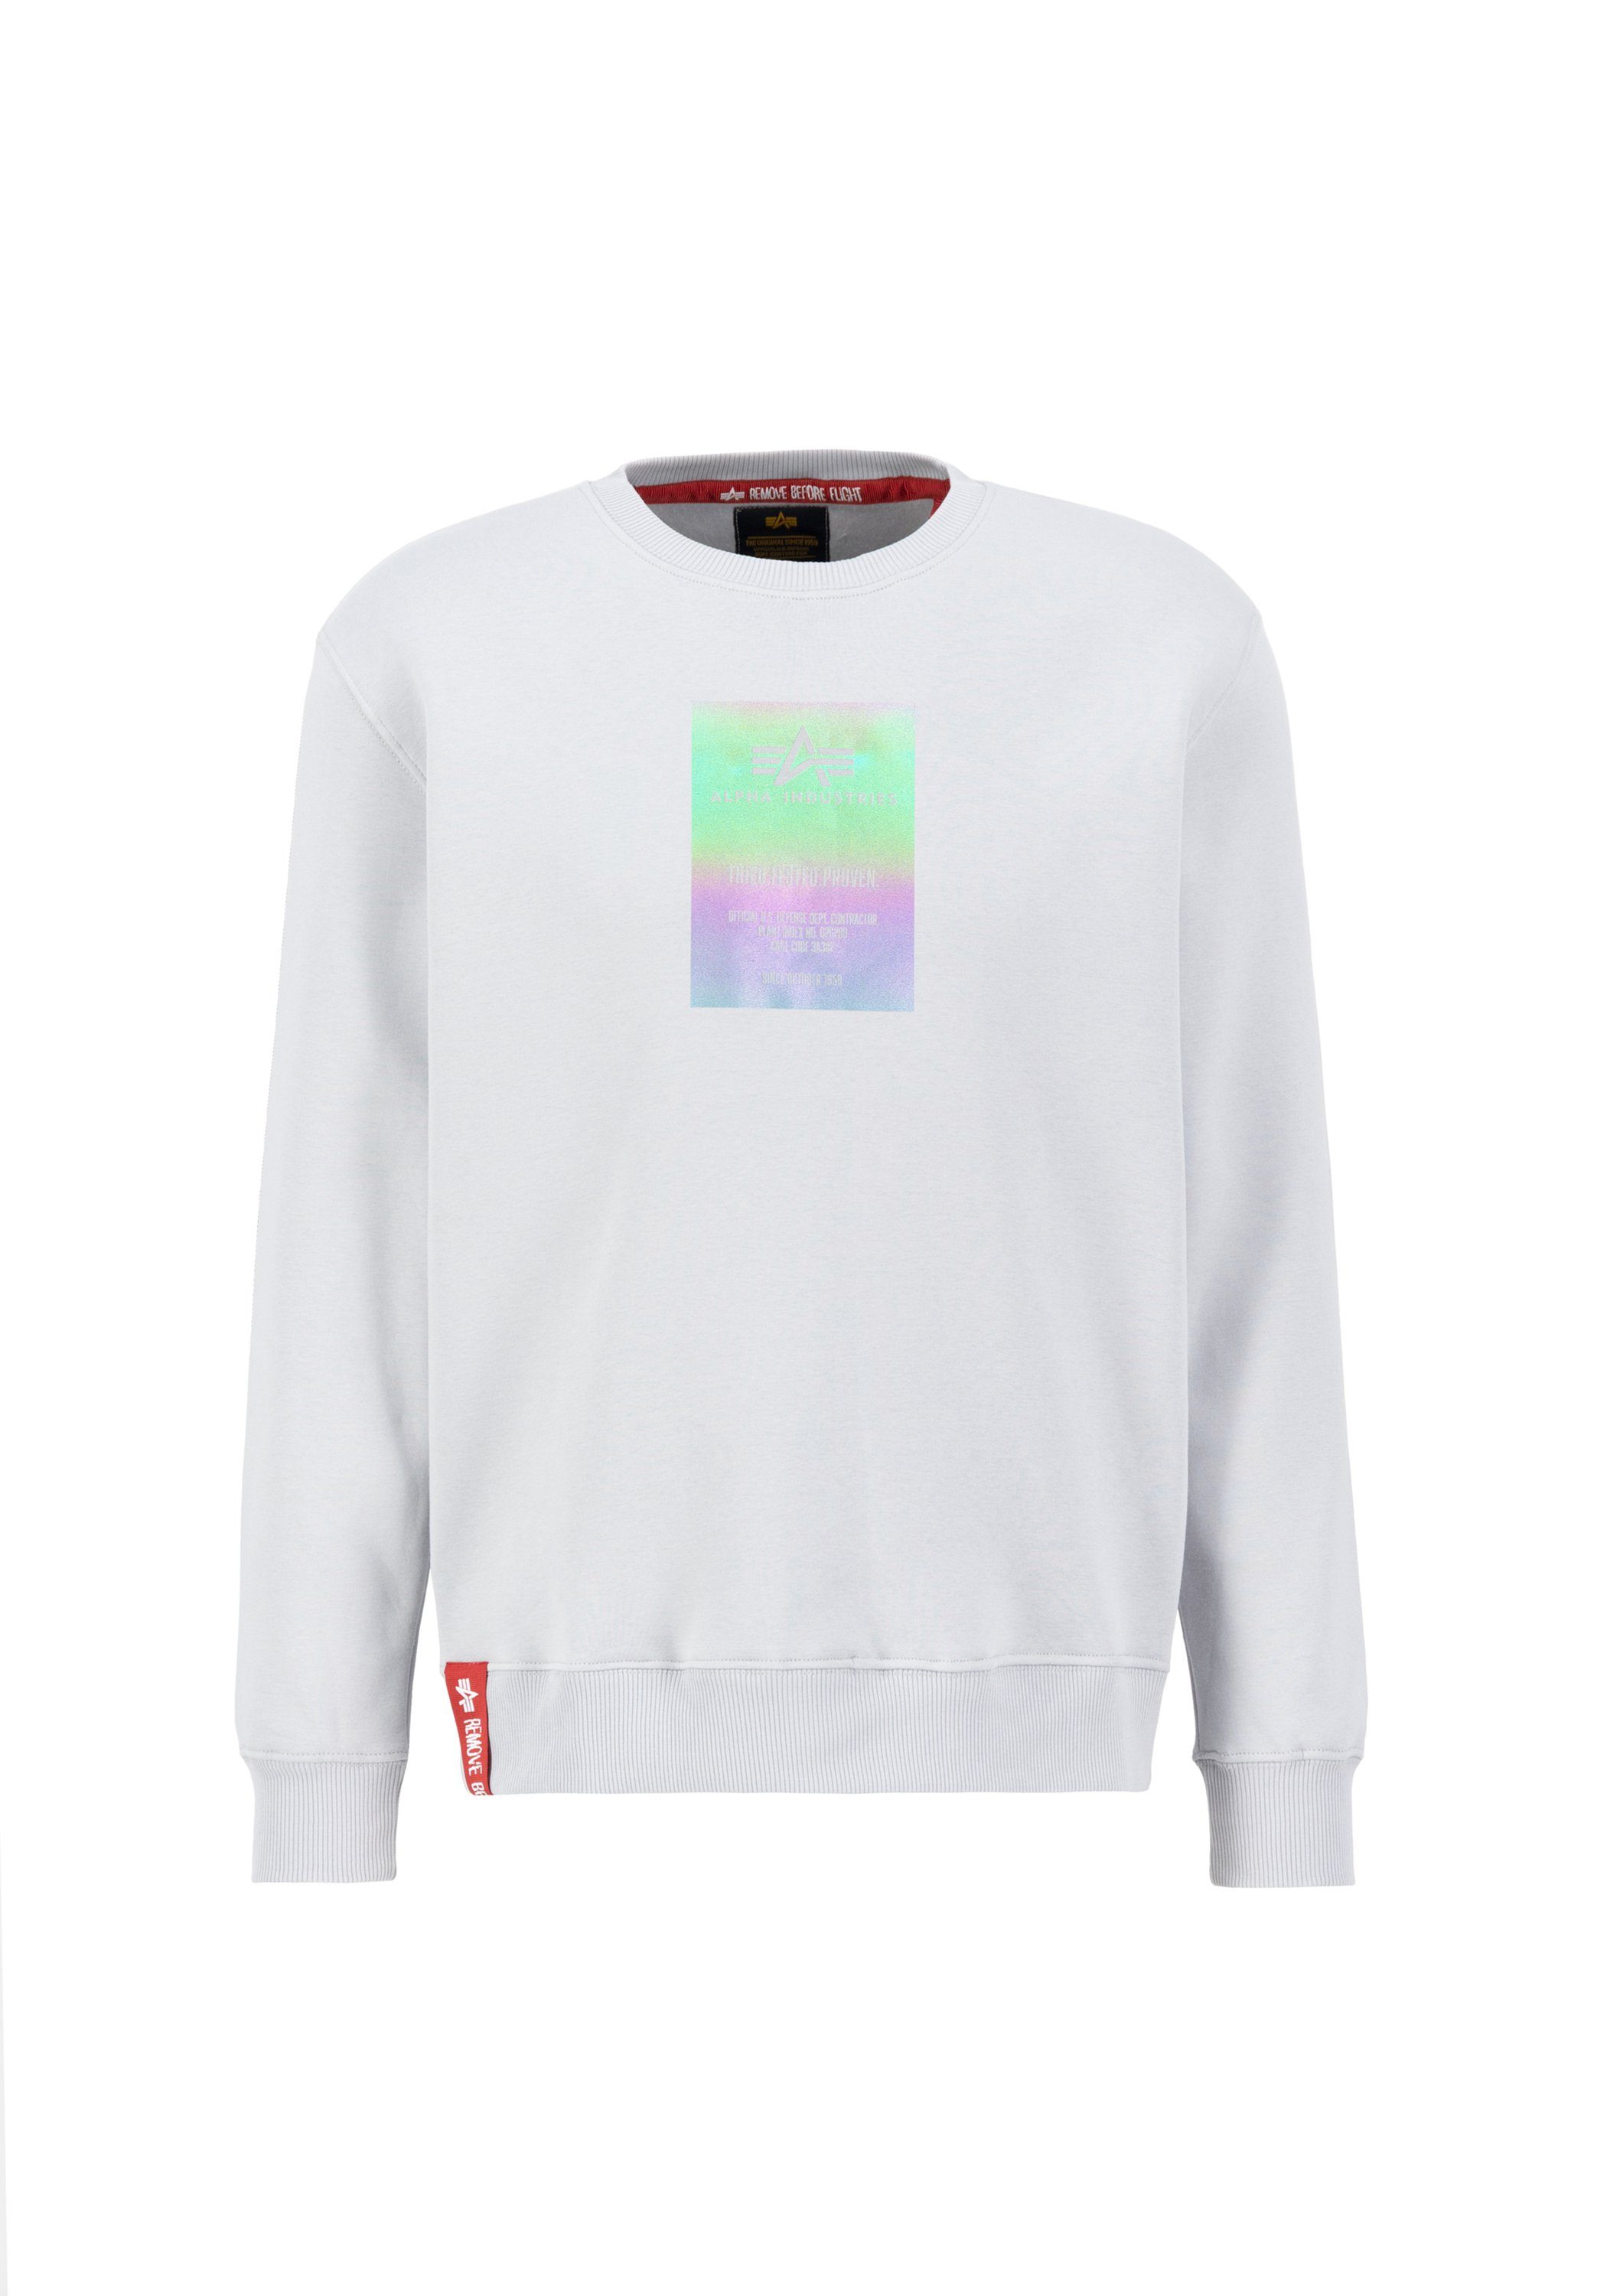 Alpha Industries Sweater Men Sweatshirts Rainbow Refl. Label Sweater